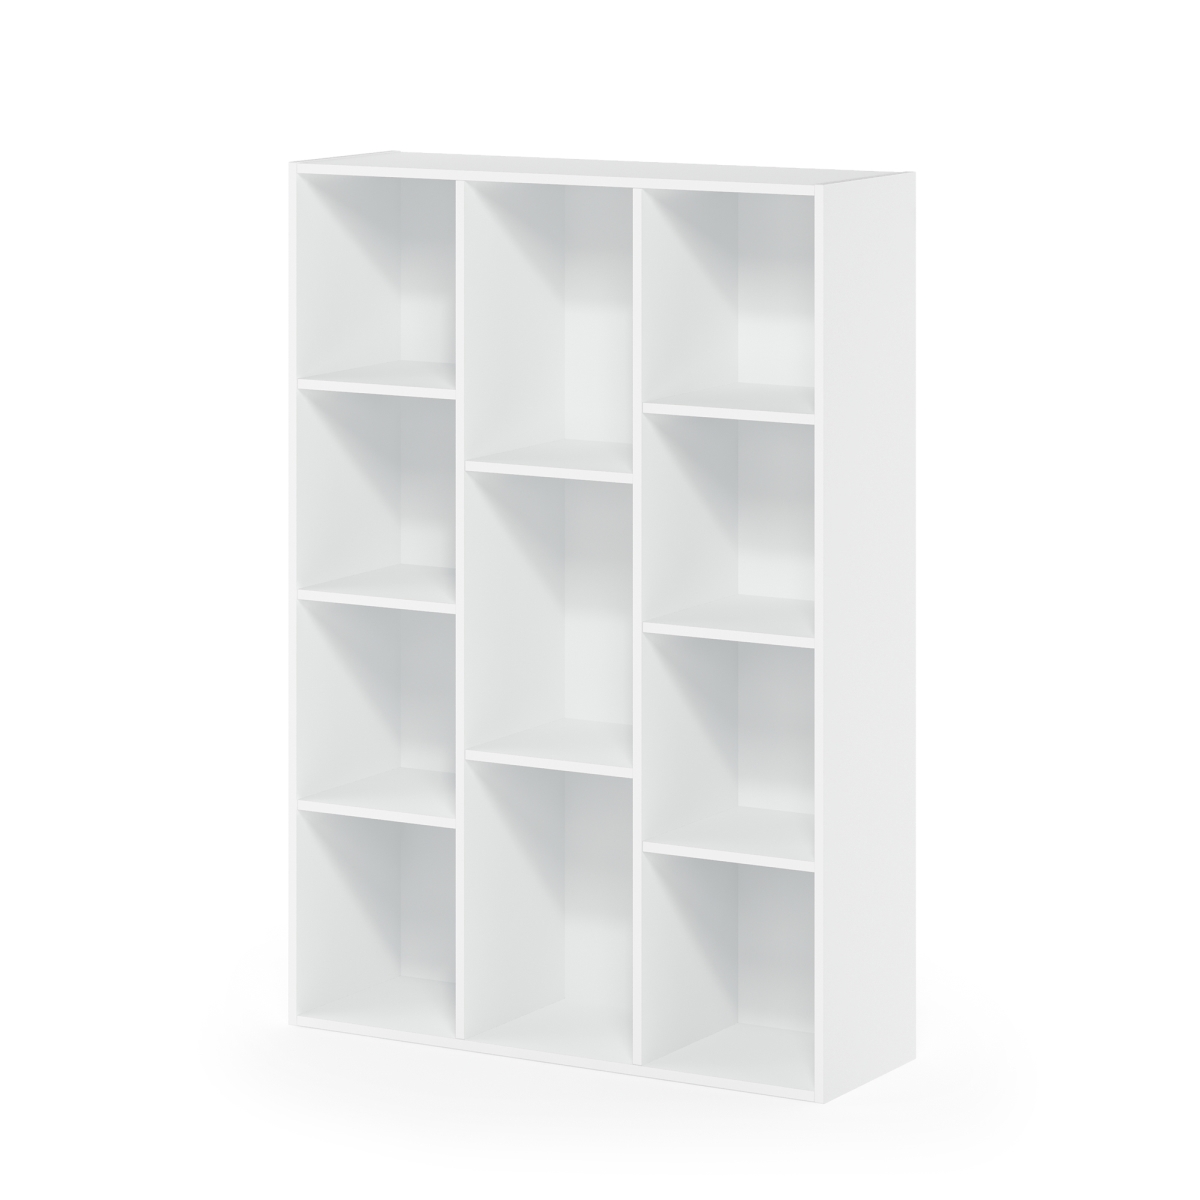 Picture of Furinno 11107WH 11-Cube Reversible Open Shelf Bookcase, White